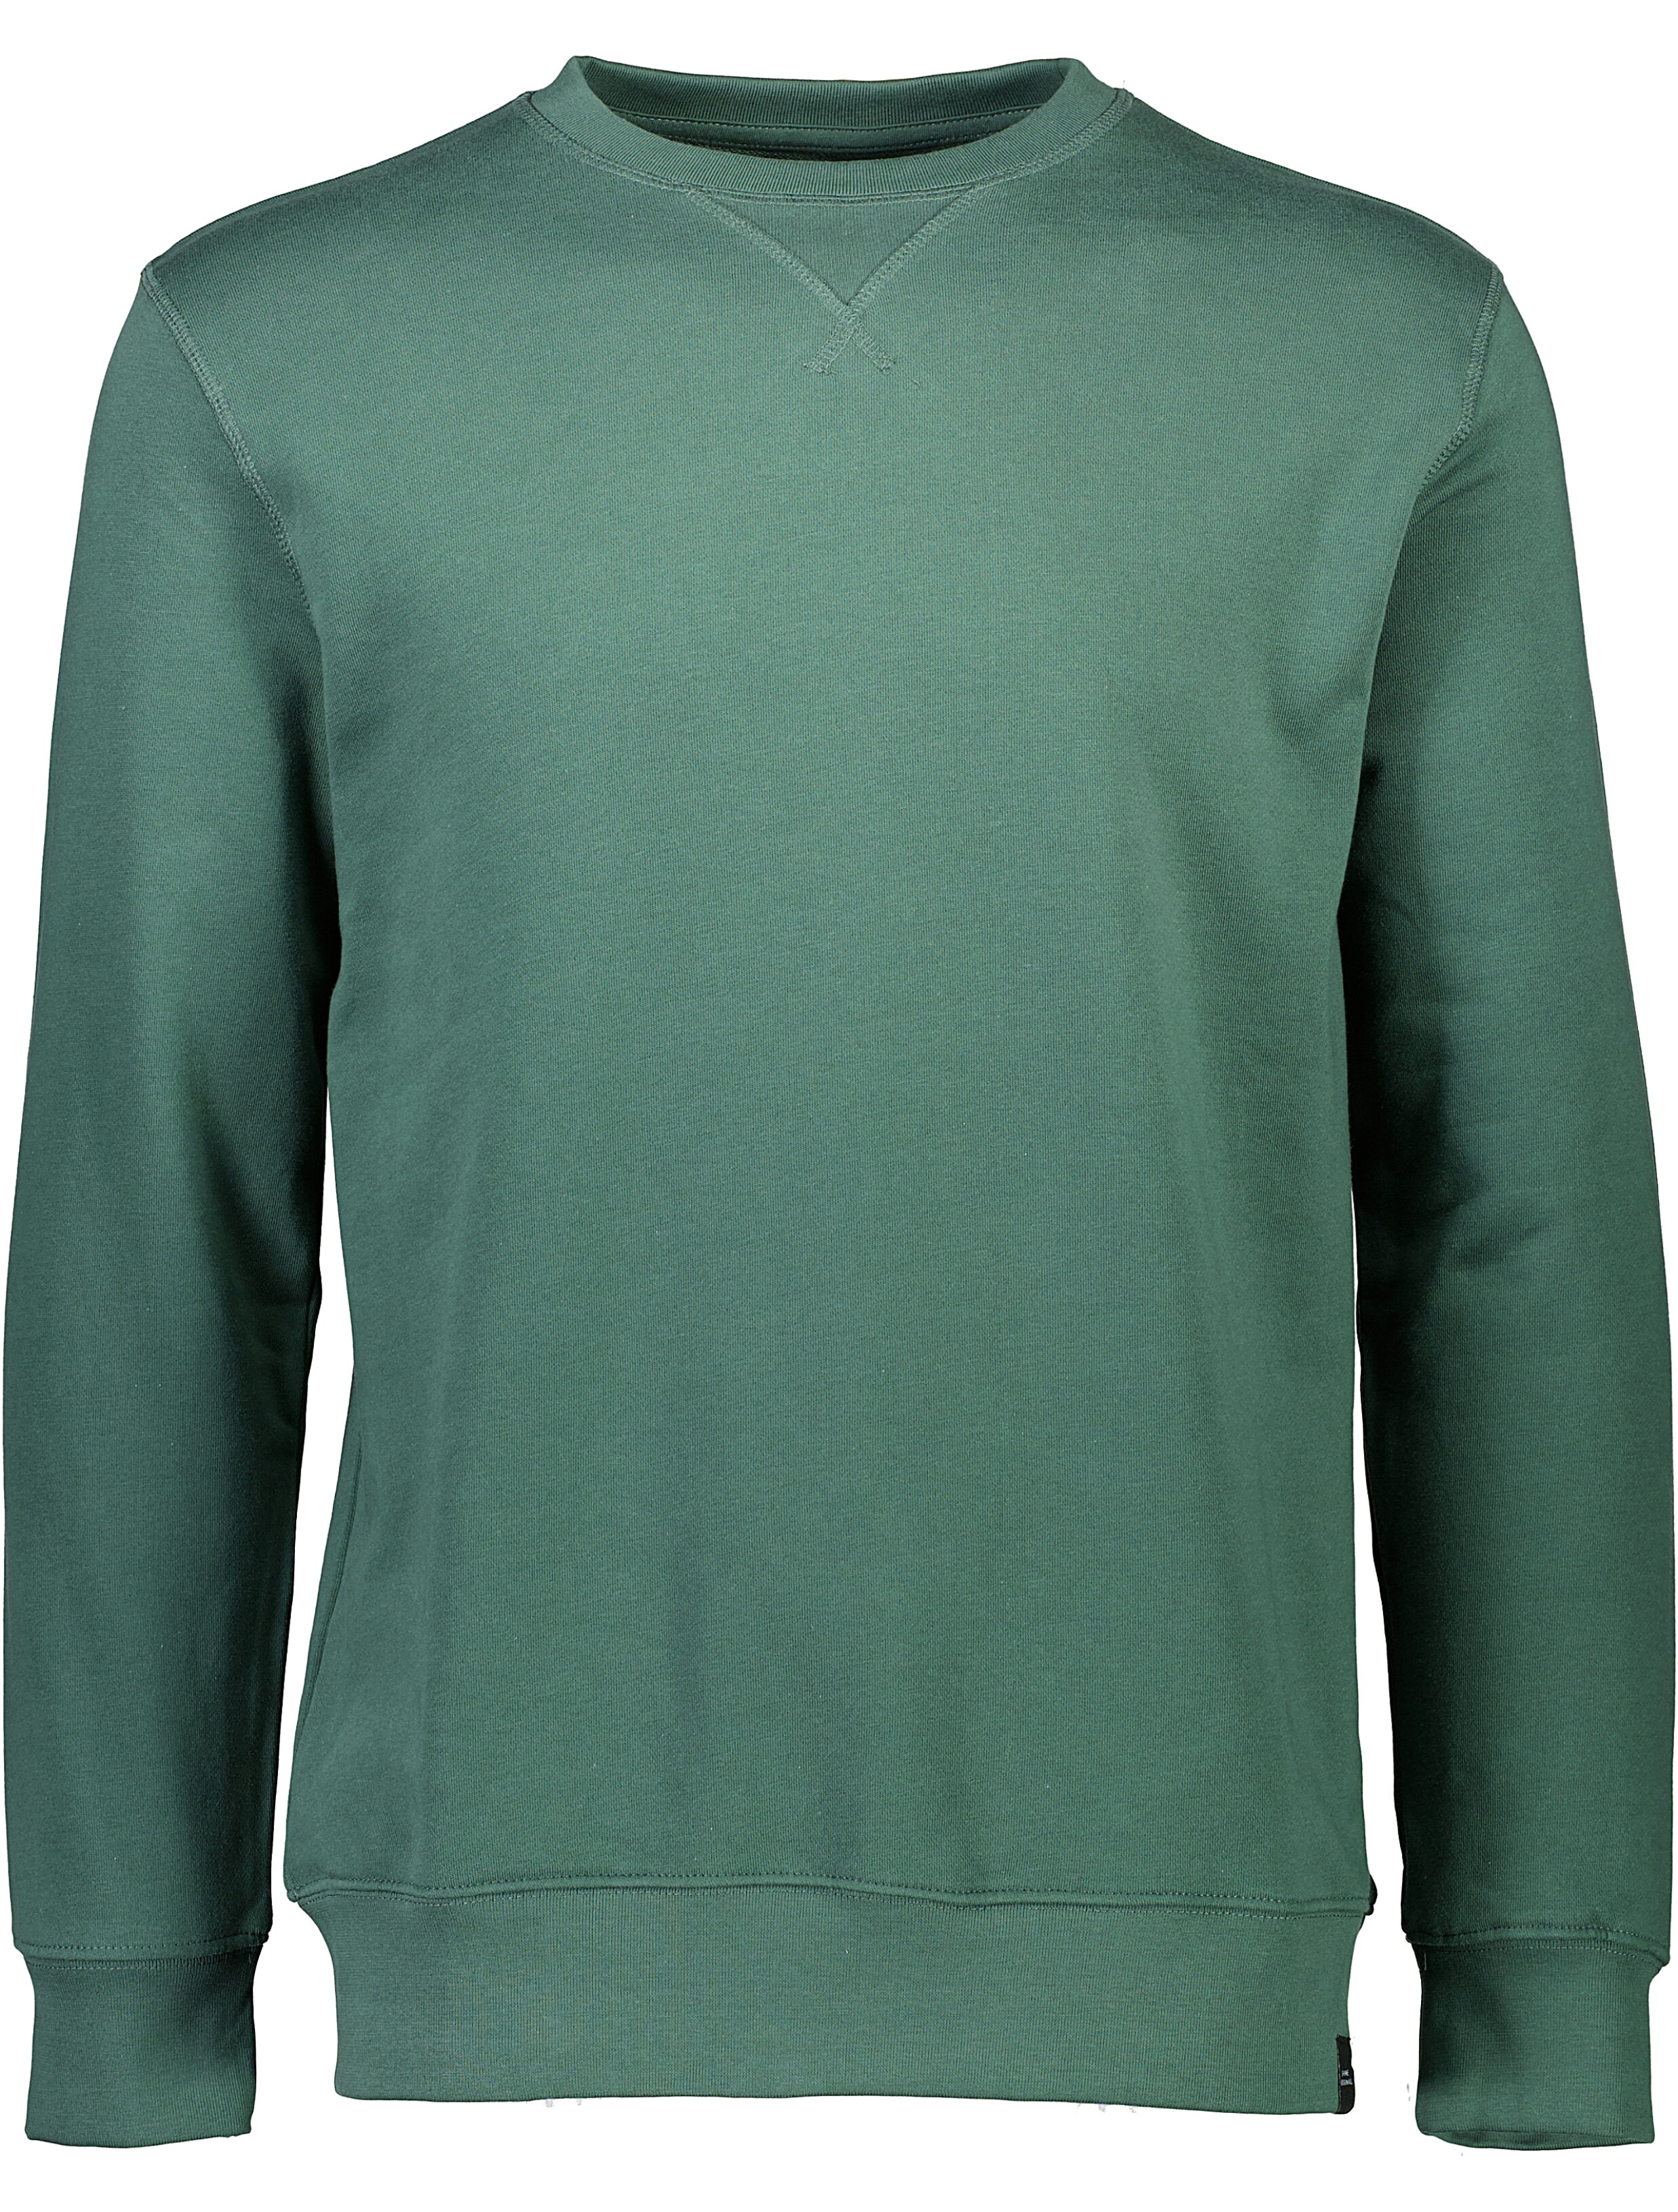 Shine Original Sweatshirt grøn / green